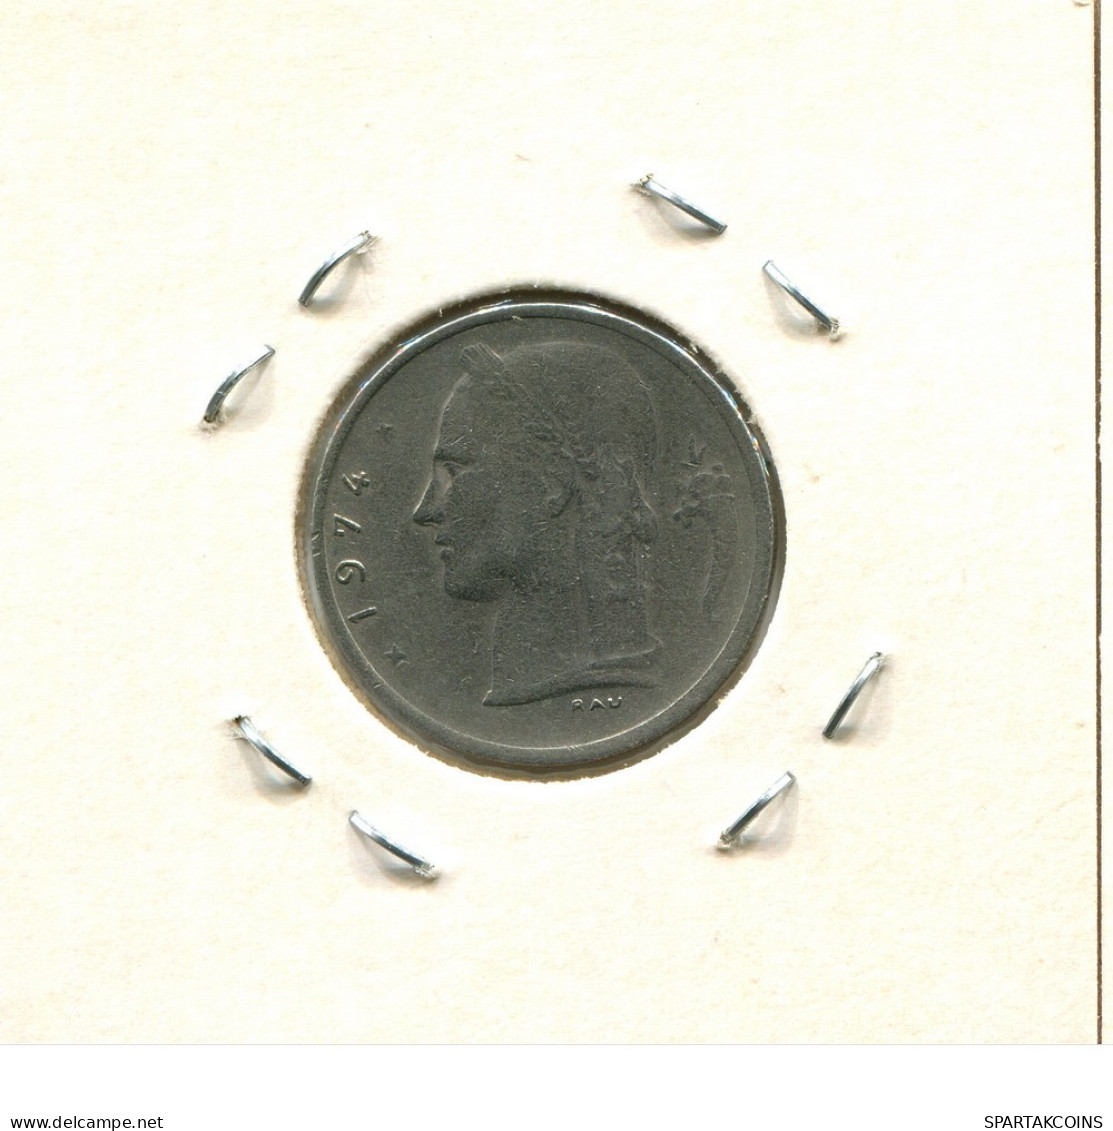 1 FRANC 1974 FRENCH Text BÉLGICA BELGIUM Moneda #BA530.E.A - 1 Franc